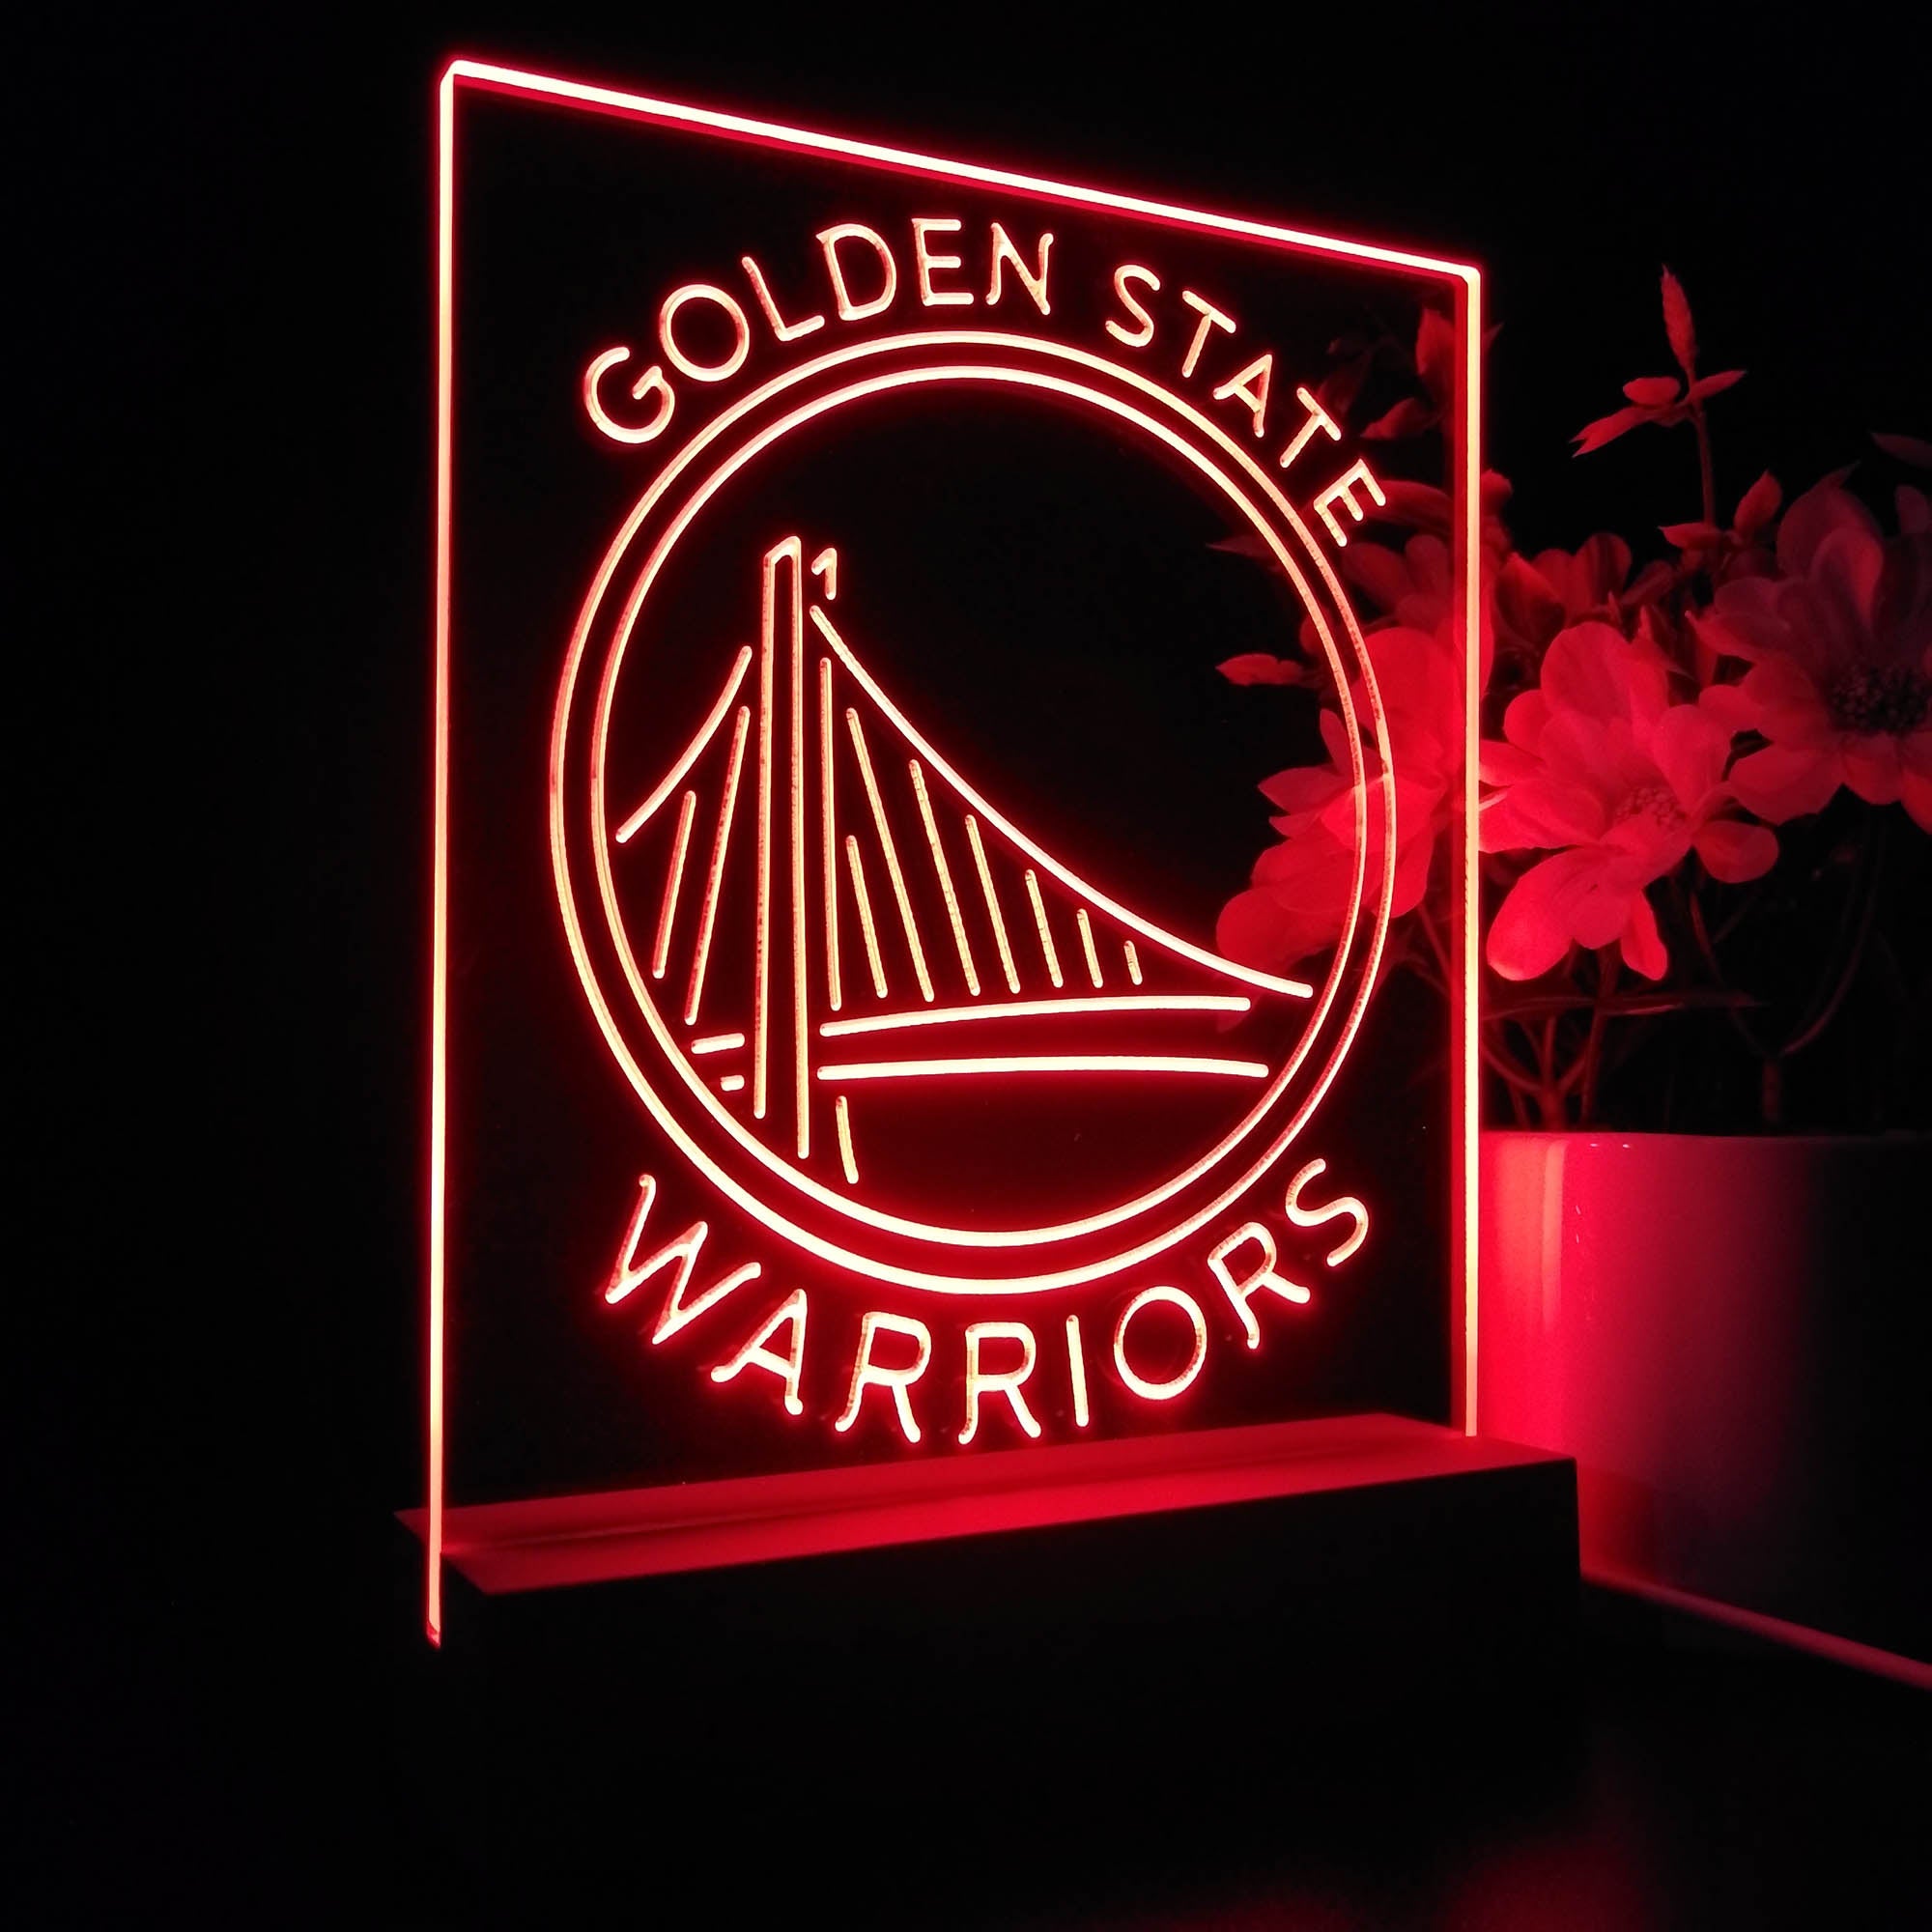 Golden State Warriors Basketball Team 3D LED Optical Illusion Sport Team Night Light